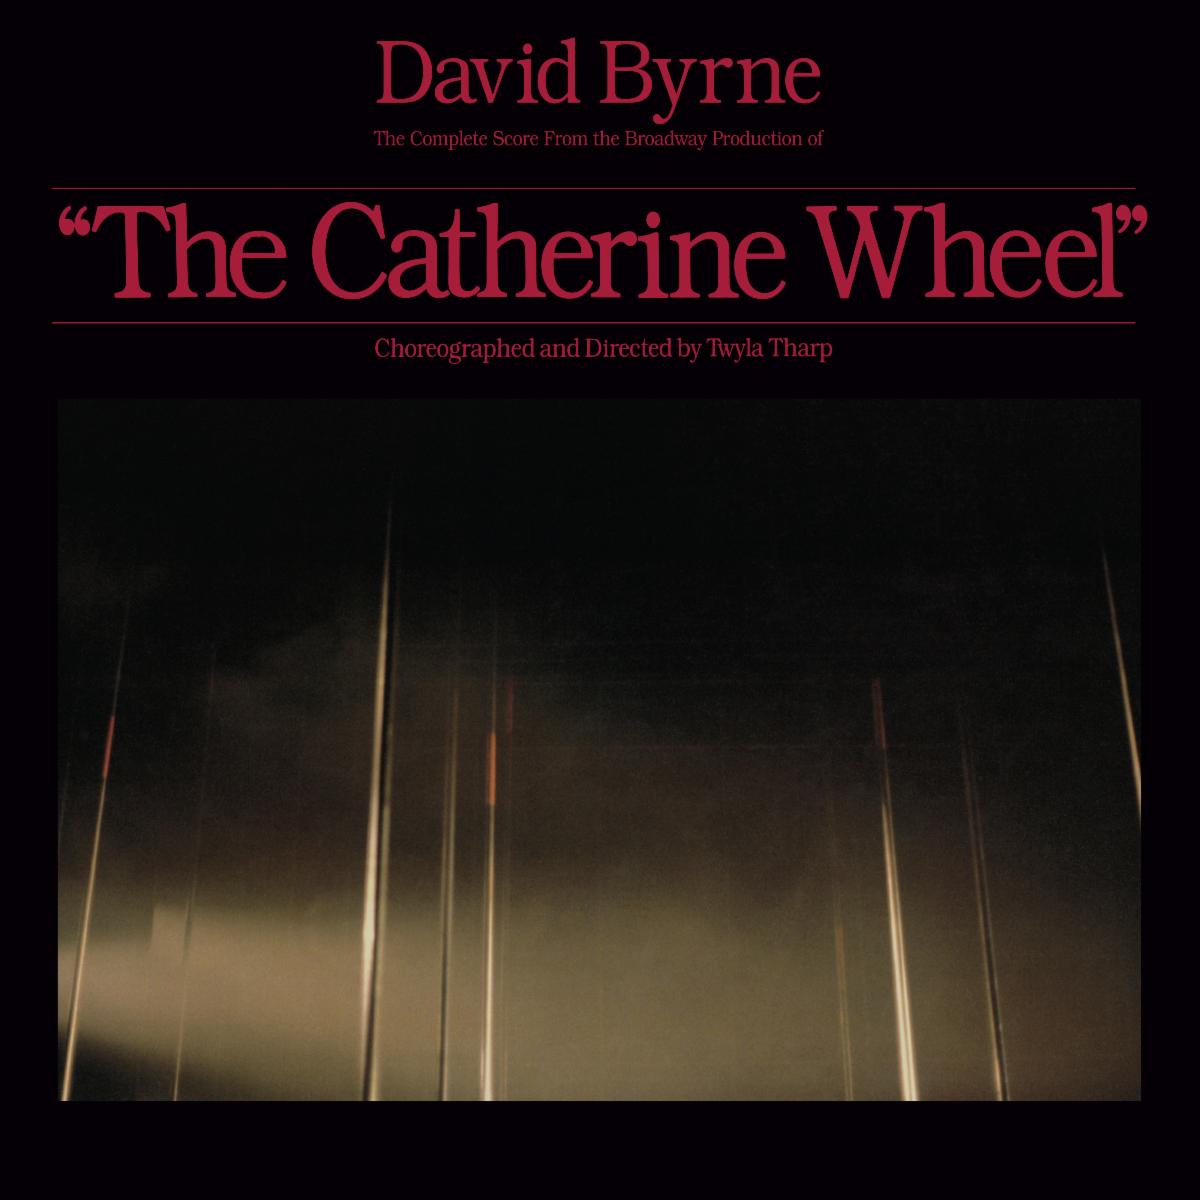 DavidByrne CatherineWheel Cover